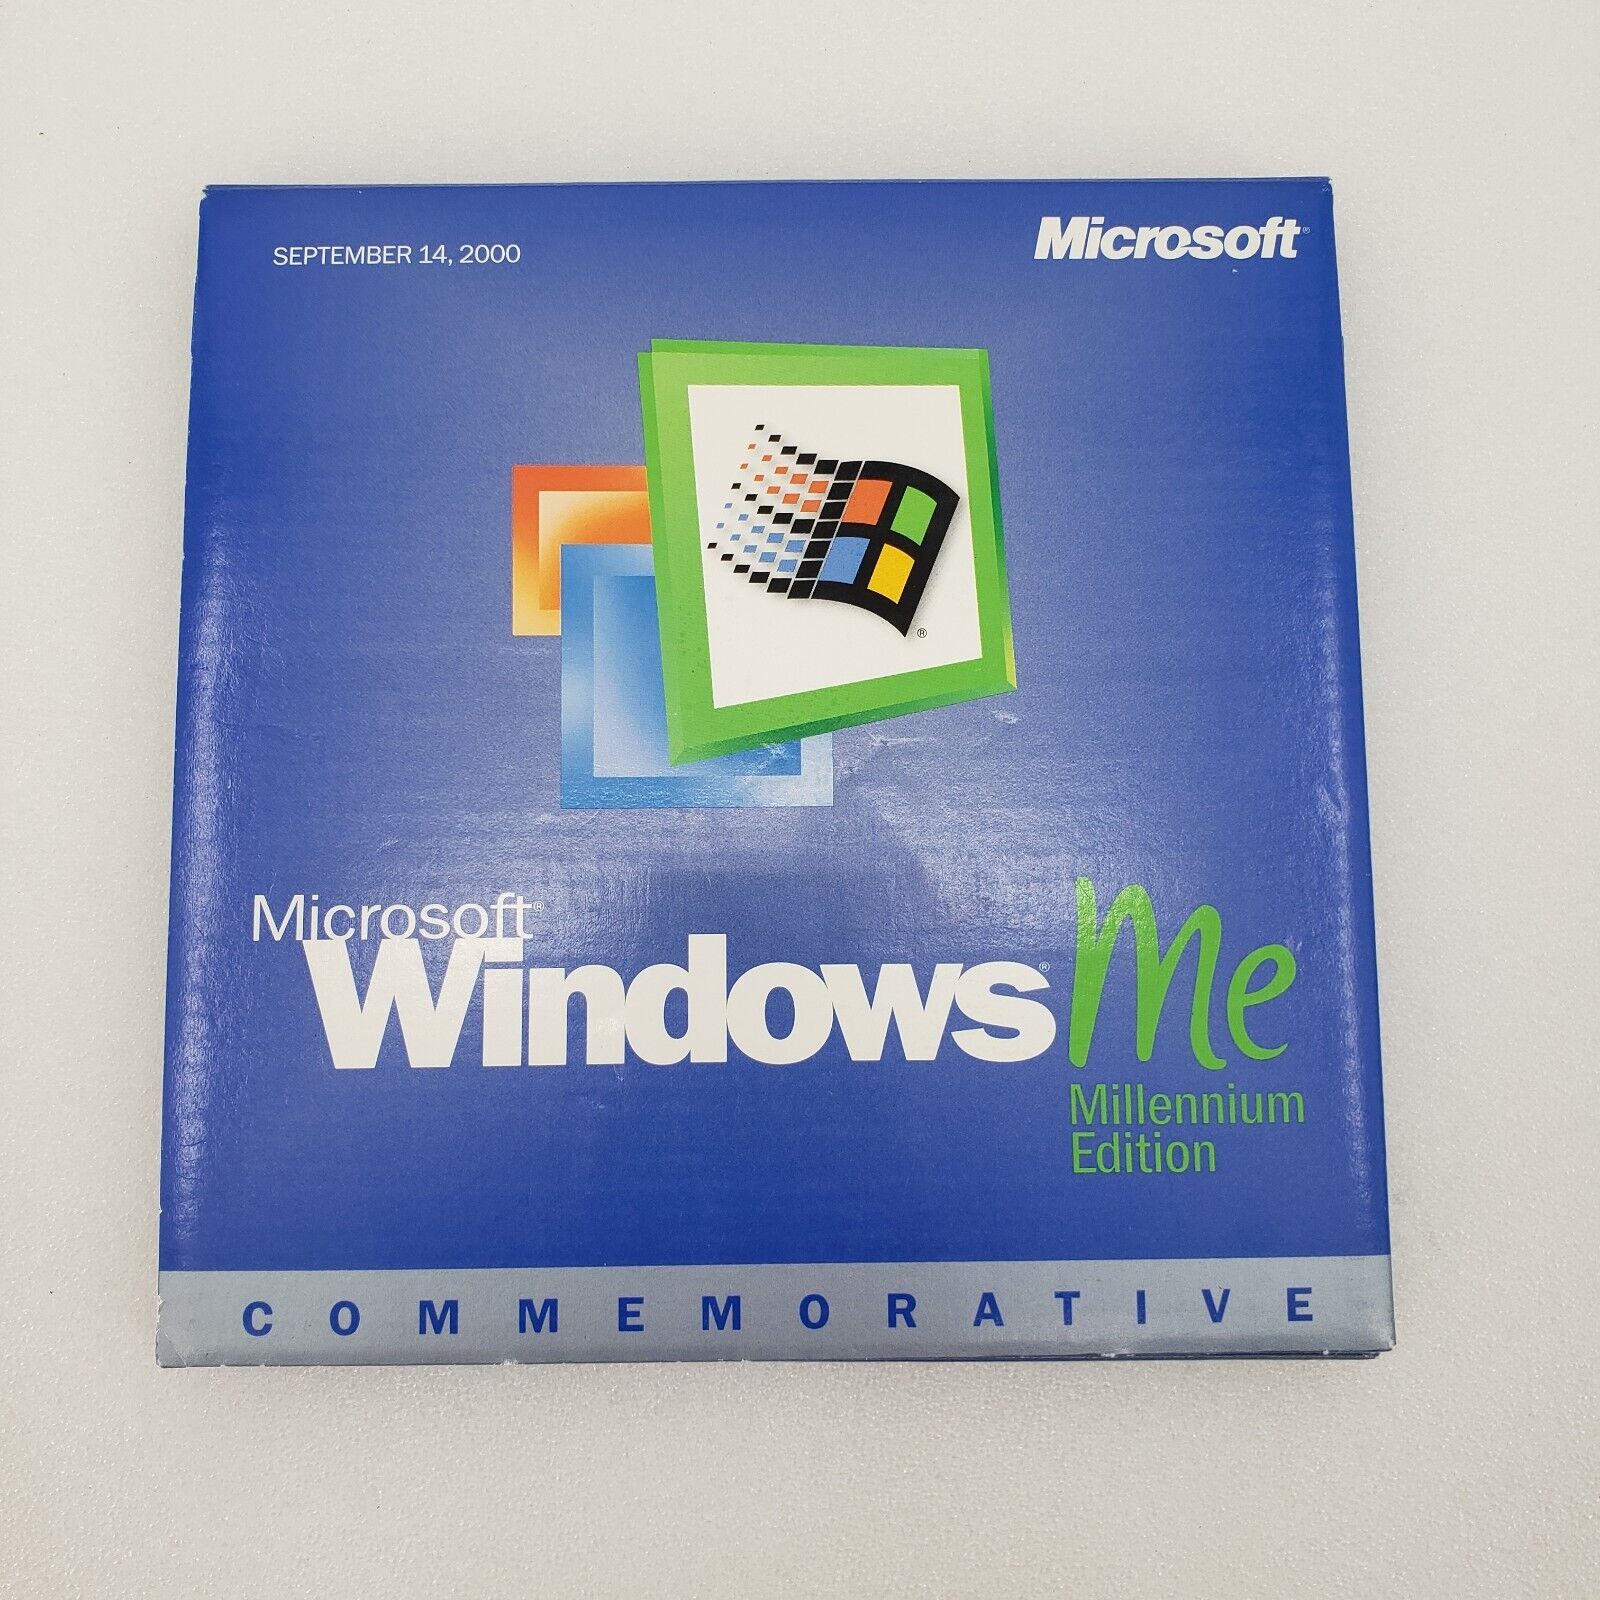 Microsoft Windows ME Millennium Edition Commemorative CD Sept 14 2000